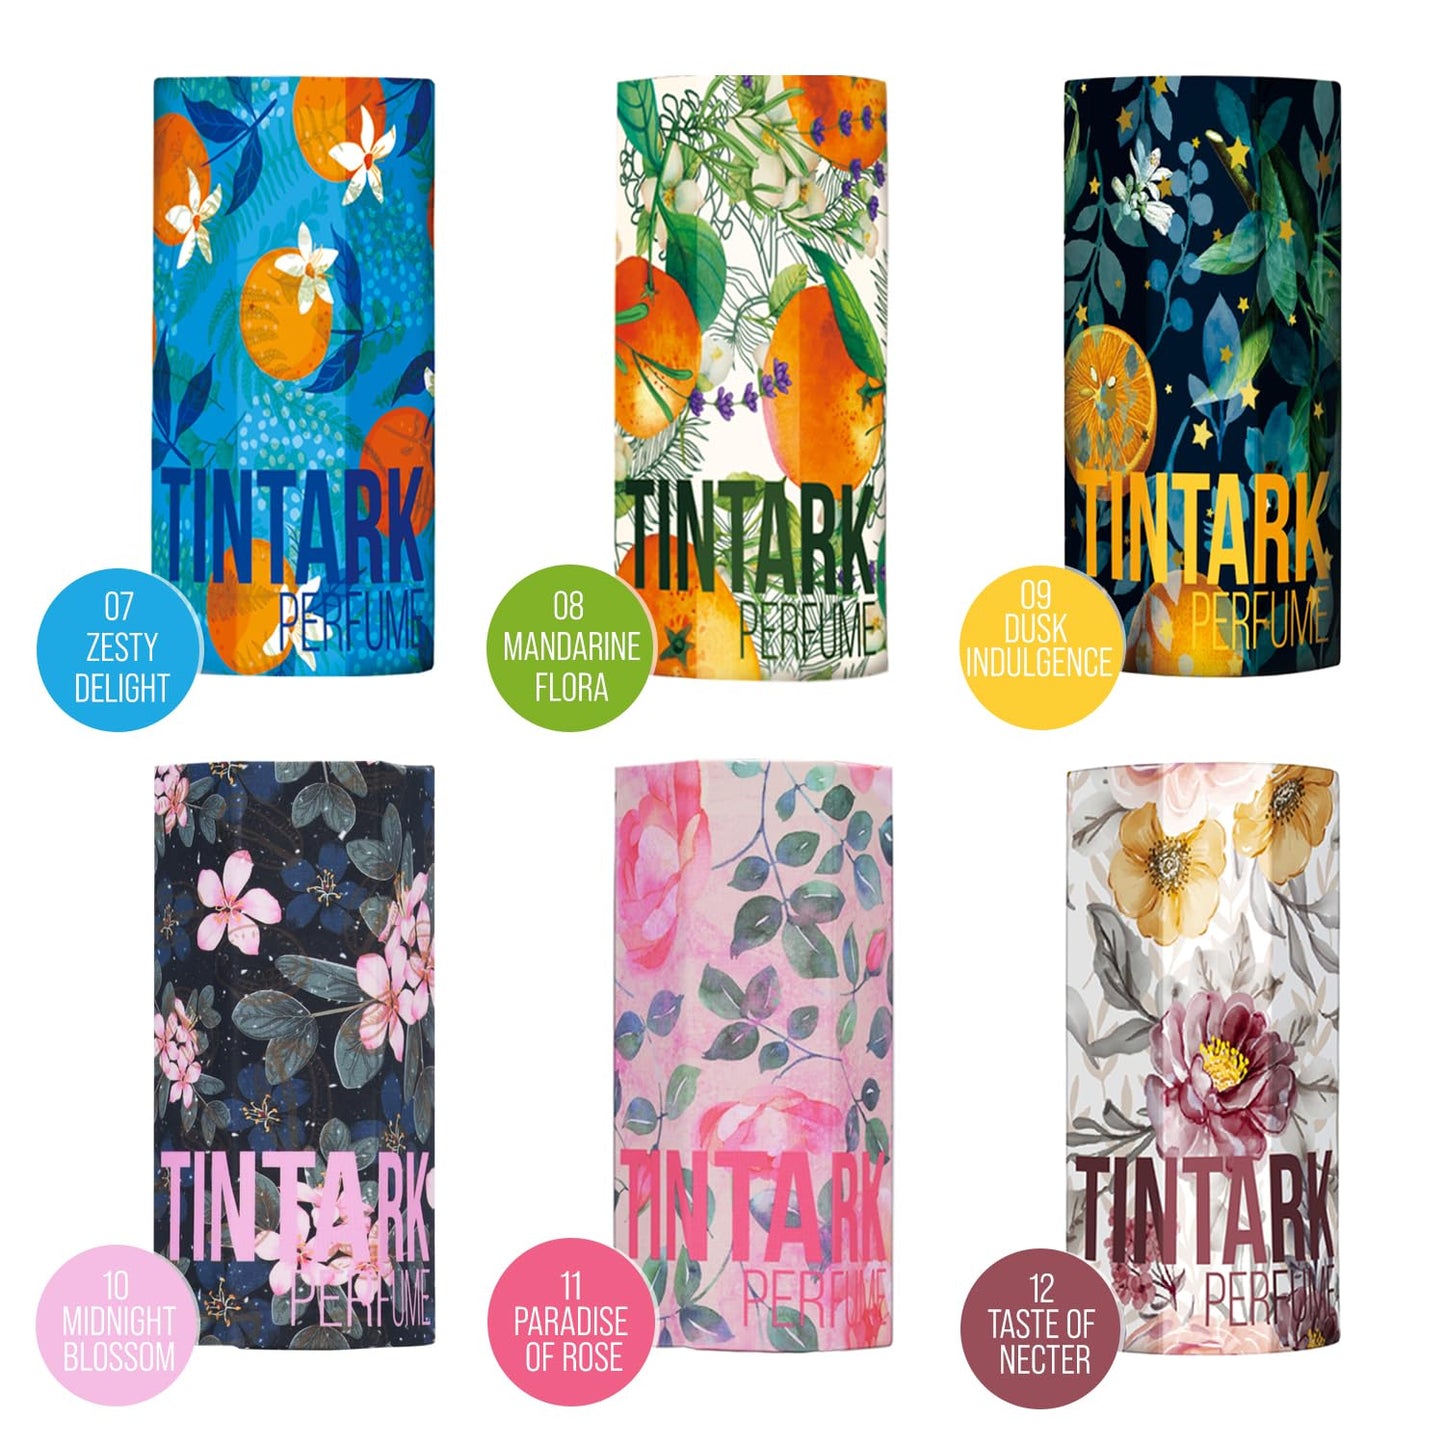 Tintark Solid Perfume Stick – 11 PARADISE OF ROSE